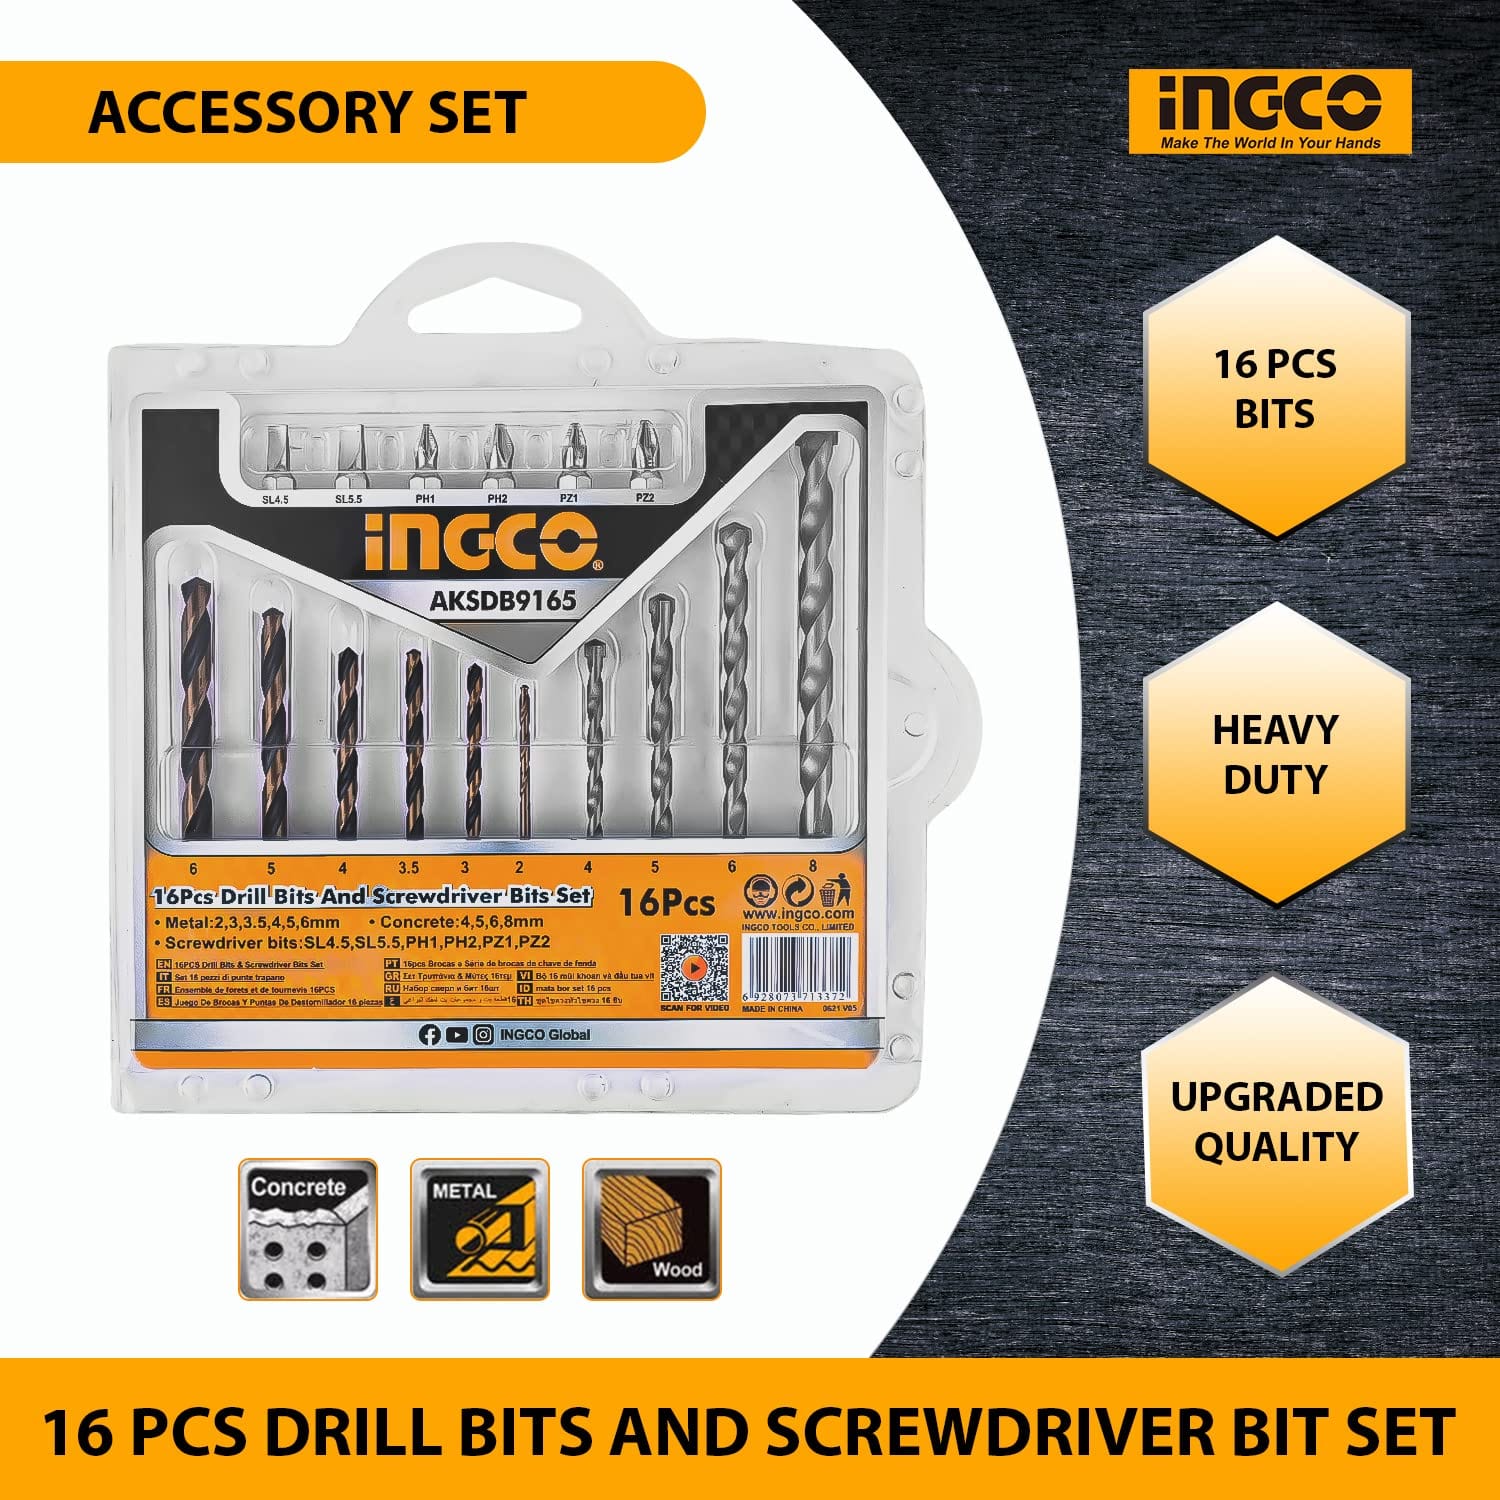 Ingco 16 Pieces Drill Bits & Screwdriver Bits Set - AKSDB9165 | Supply Master | Accra, Ghana Drill Bits Buy Tools hardware Building materials